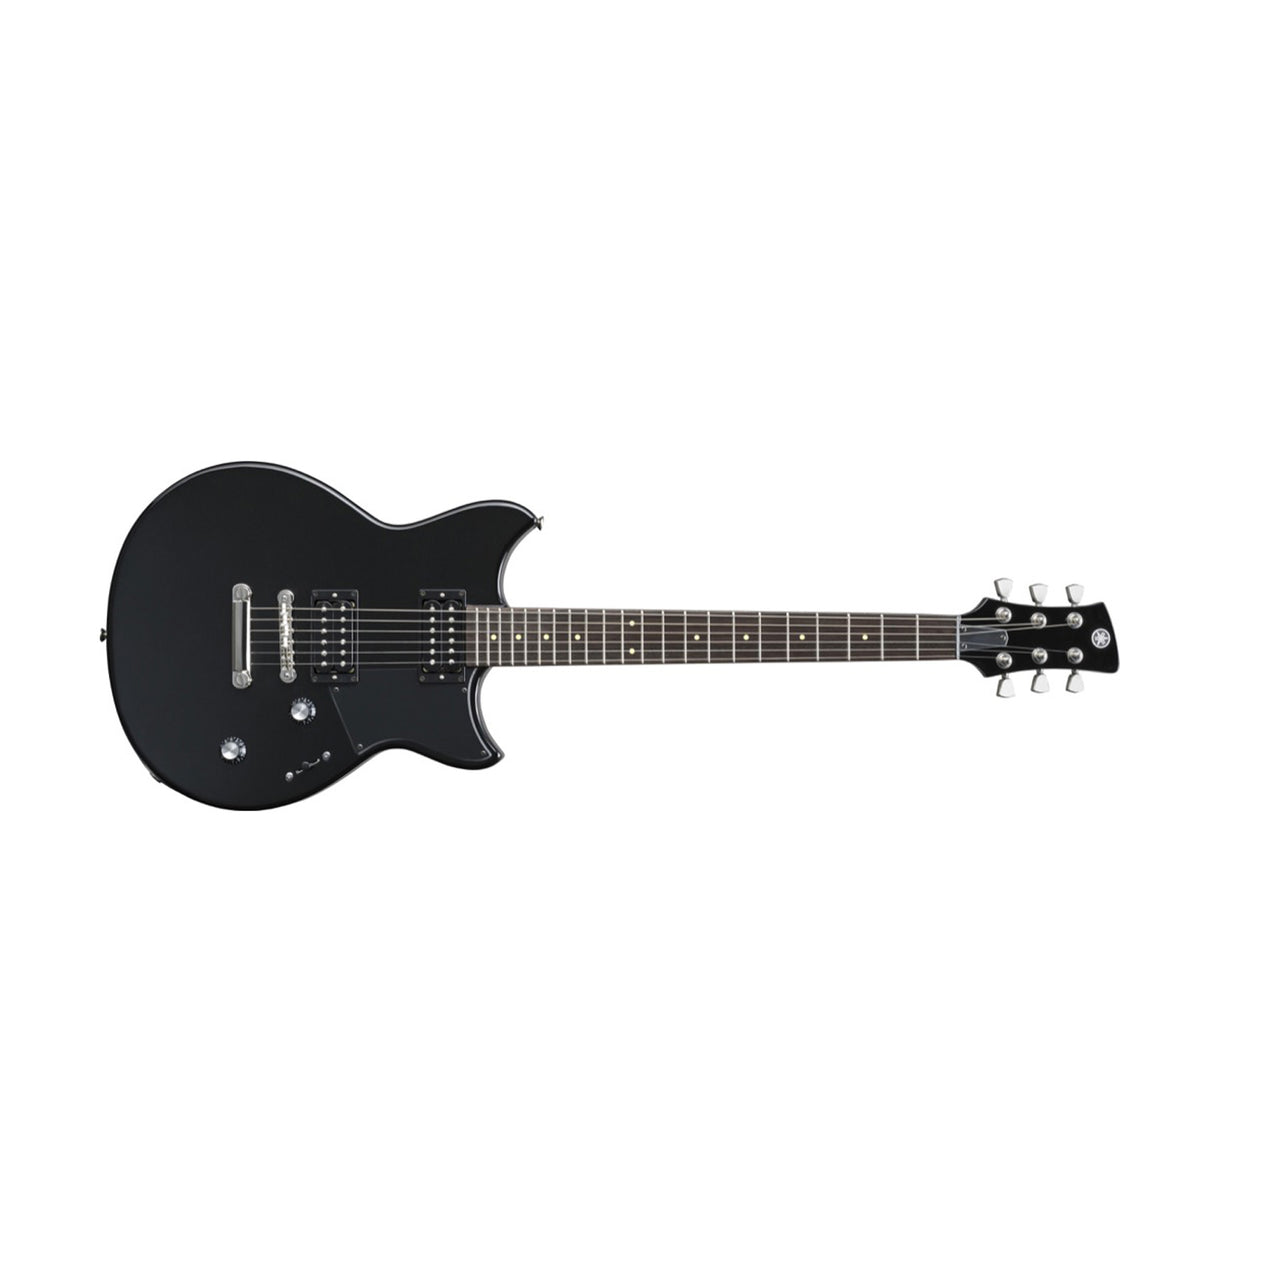 Guitarra Electrica Yamaha Revstar Black Steel Rs320blst